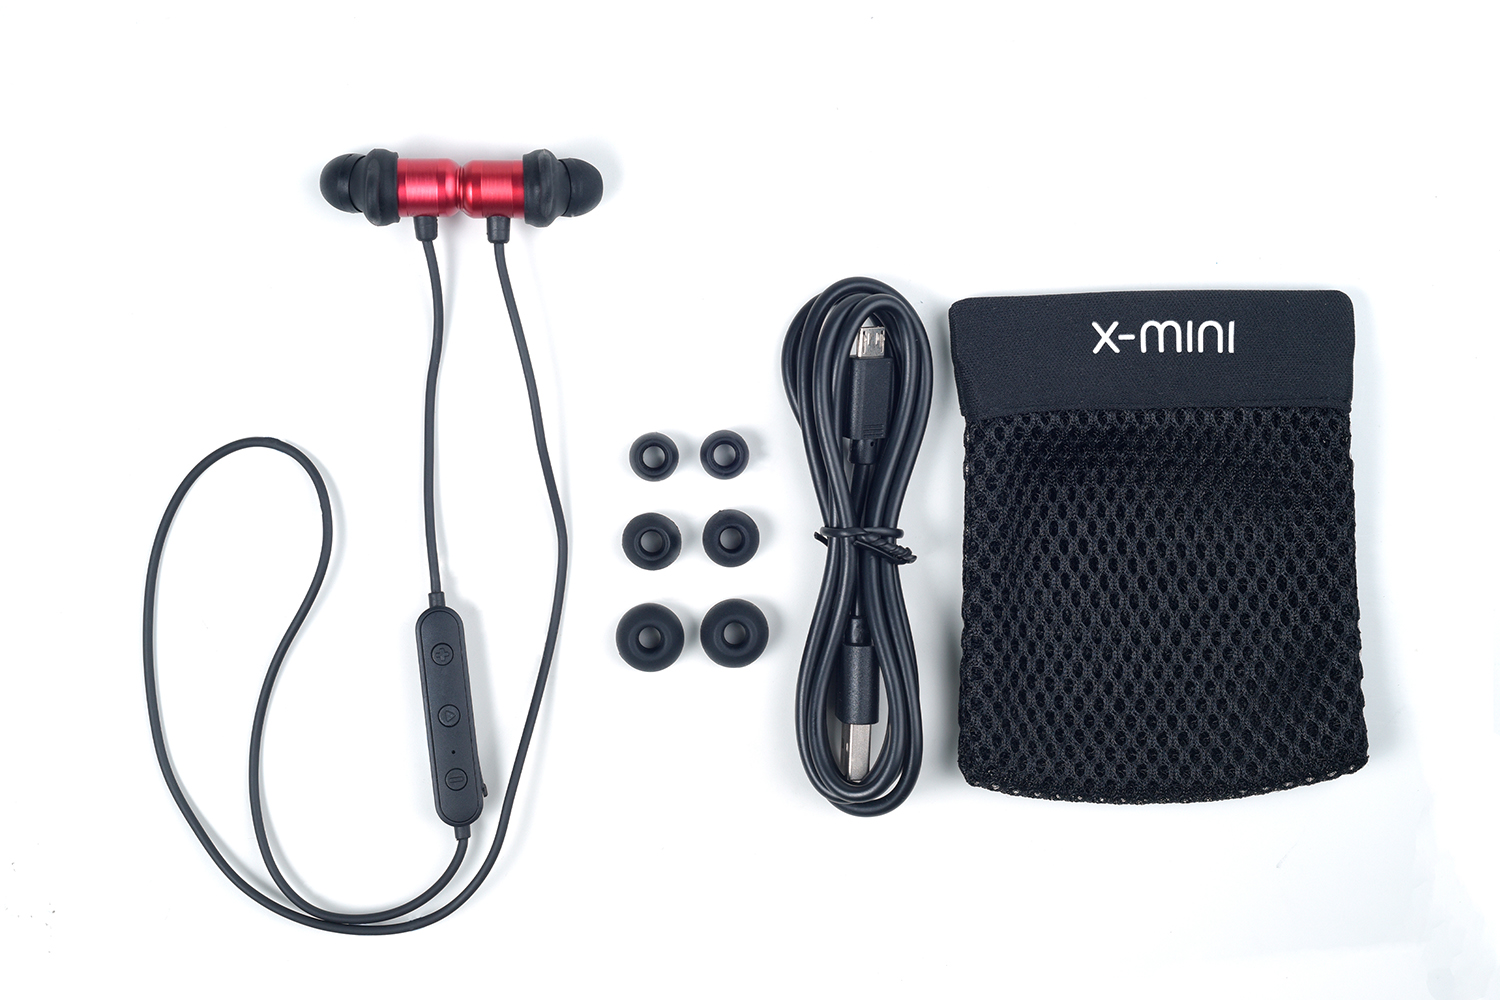 X-mini RAY+ XOUNDBUDS Singapore Price review best wireless headphones